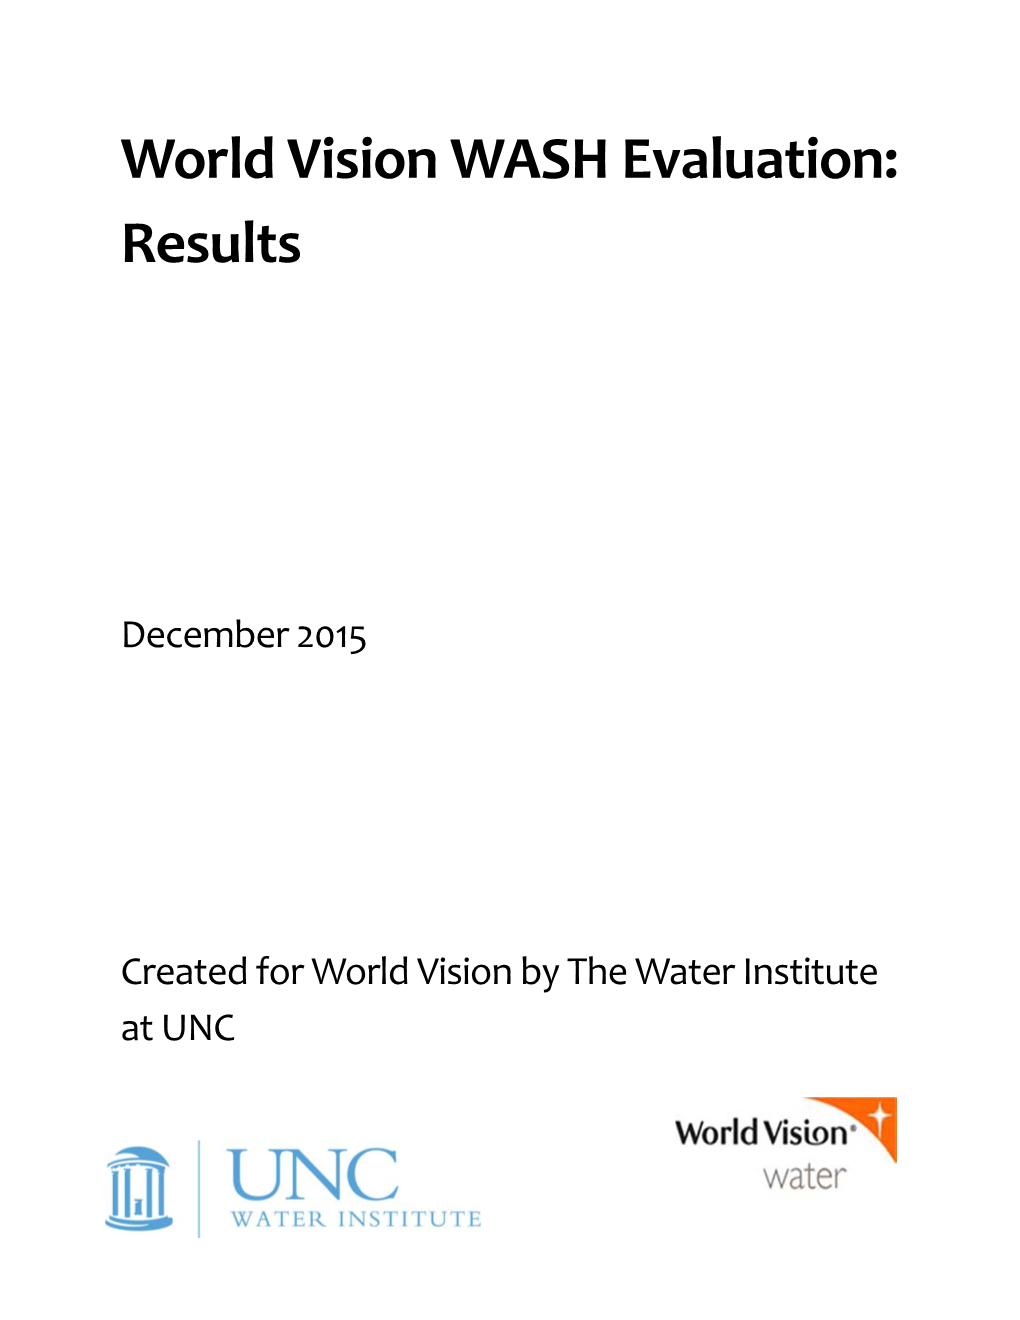 World Vision WASH Evaluation: Results